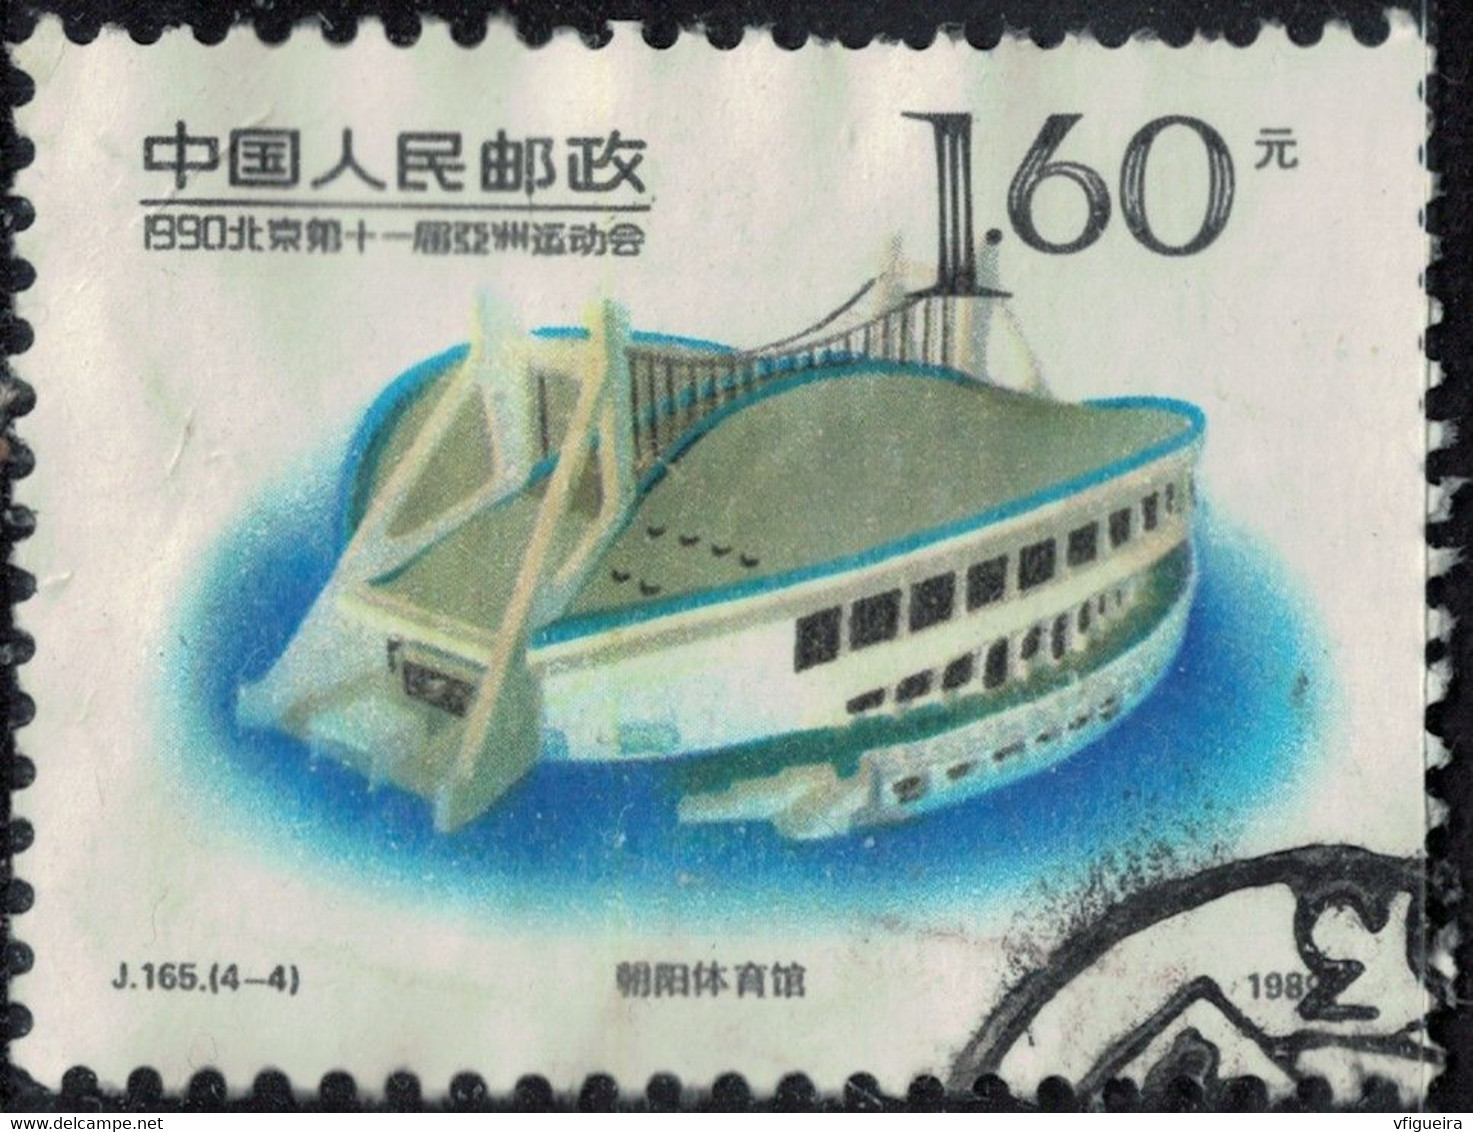 Chine 1989 Oblitéré Used Gymnase Chaoyang Gymnasium Beijing Pékin Y&T CN 2975 SU - Used Stamps